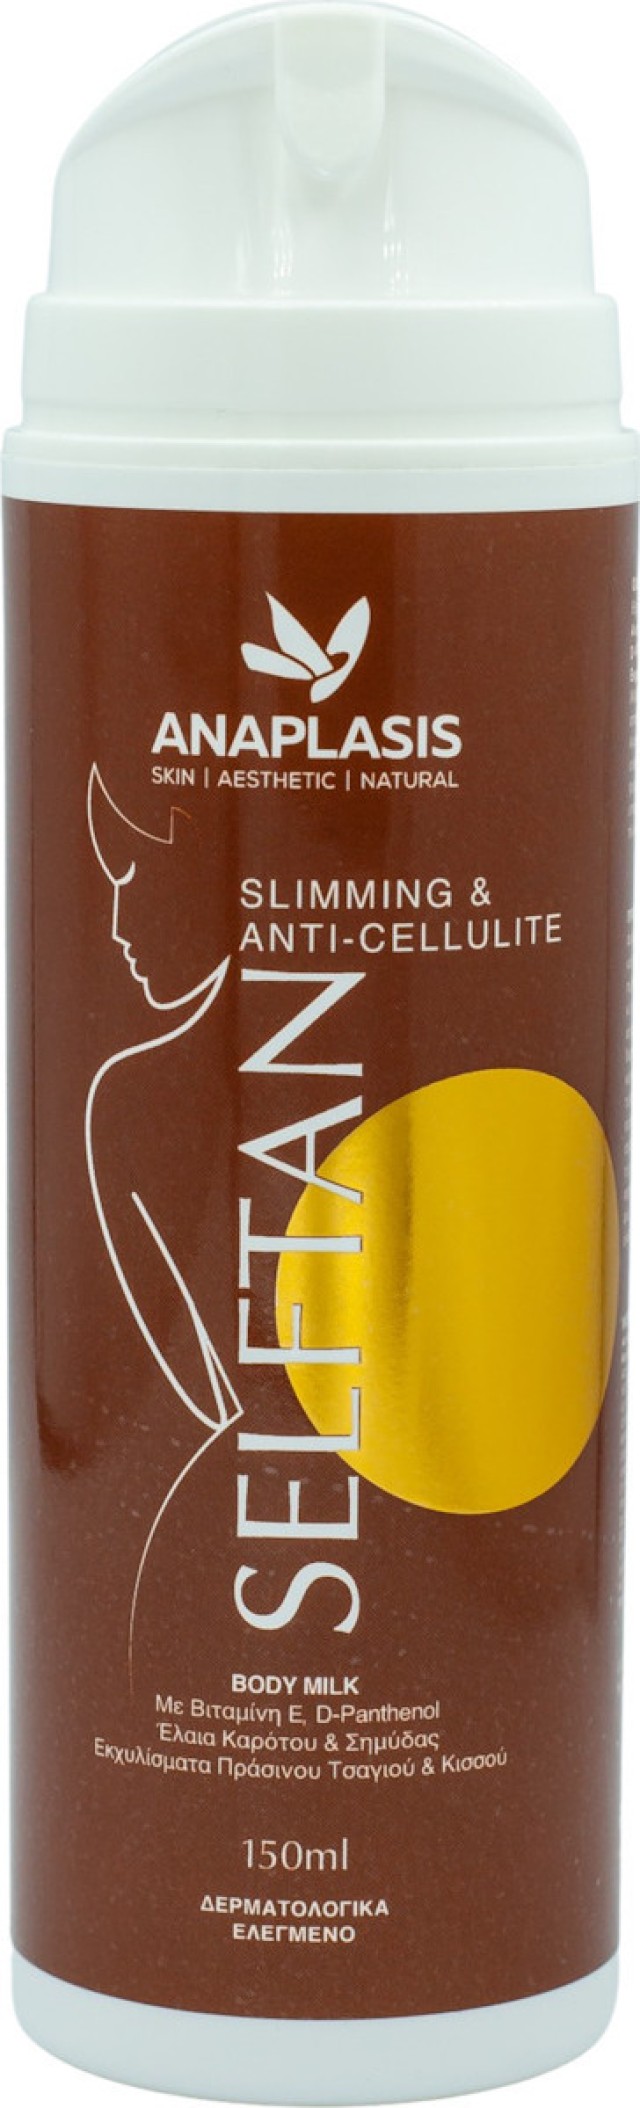 AnaPlasis Self Tan Slimming & Anti Cellulite Body Milk Αυτομαυριστικό Γαλάκτωμα Σύσφιξης & Κατά της Κυτταρίτιδας 150ml